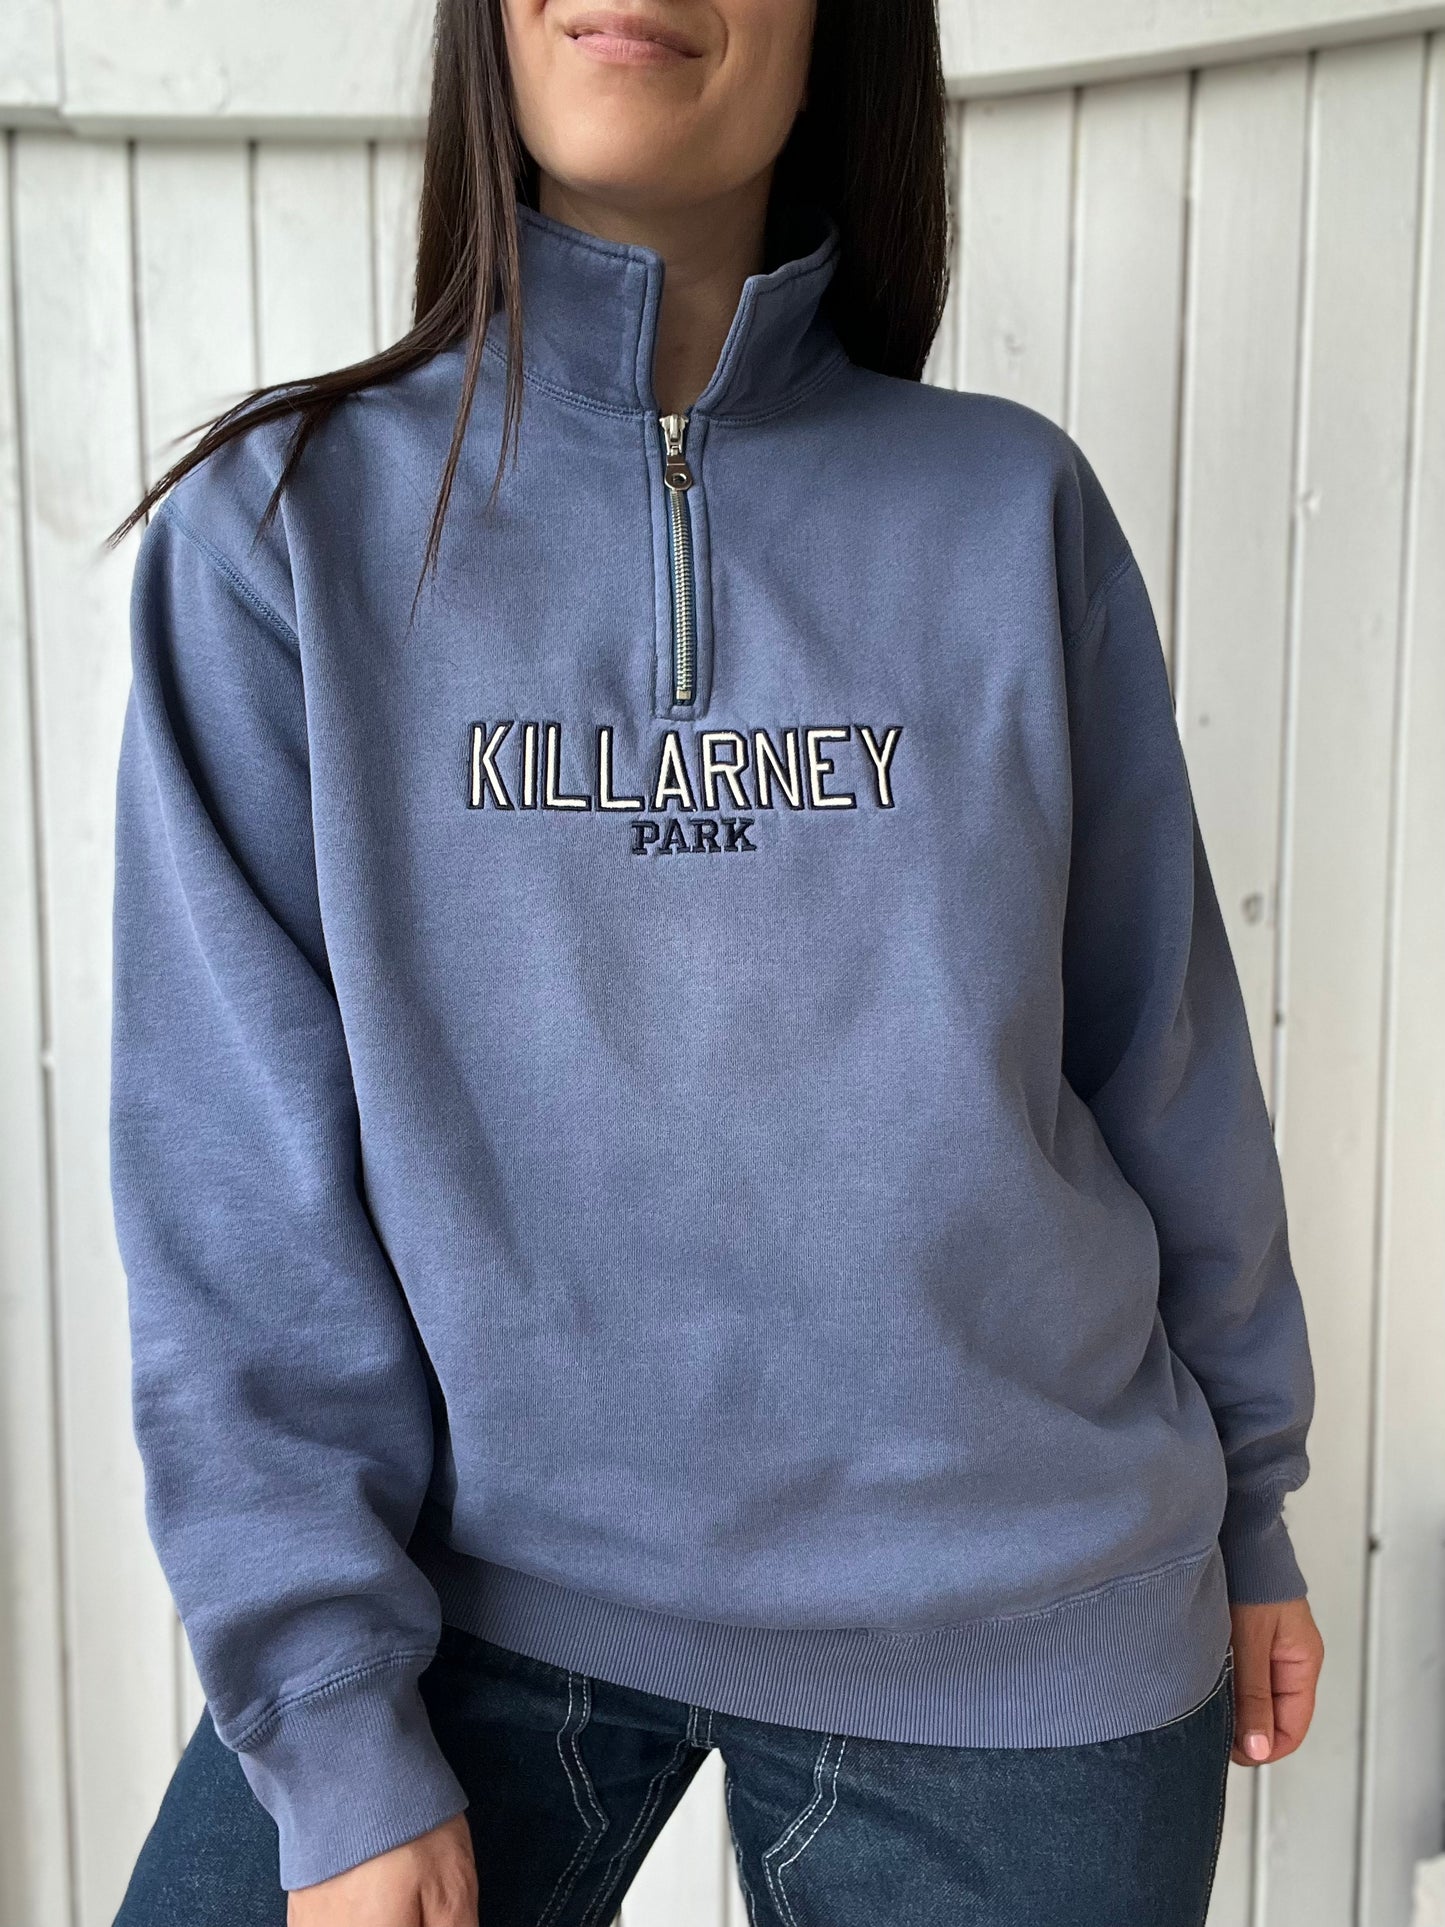 Killarney Park Pullover Sweater - Size XL